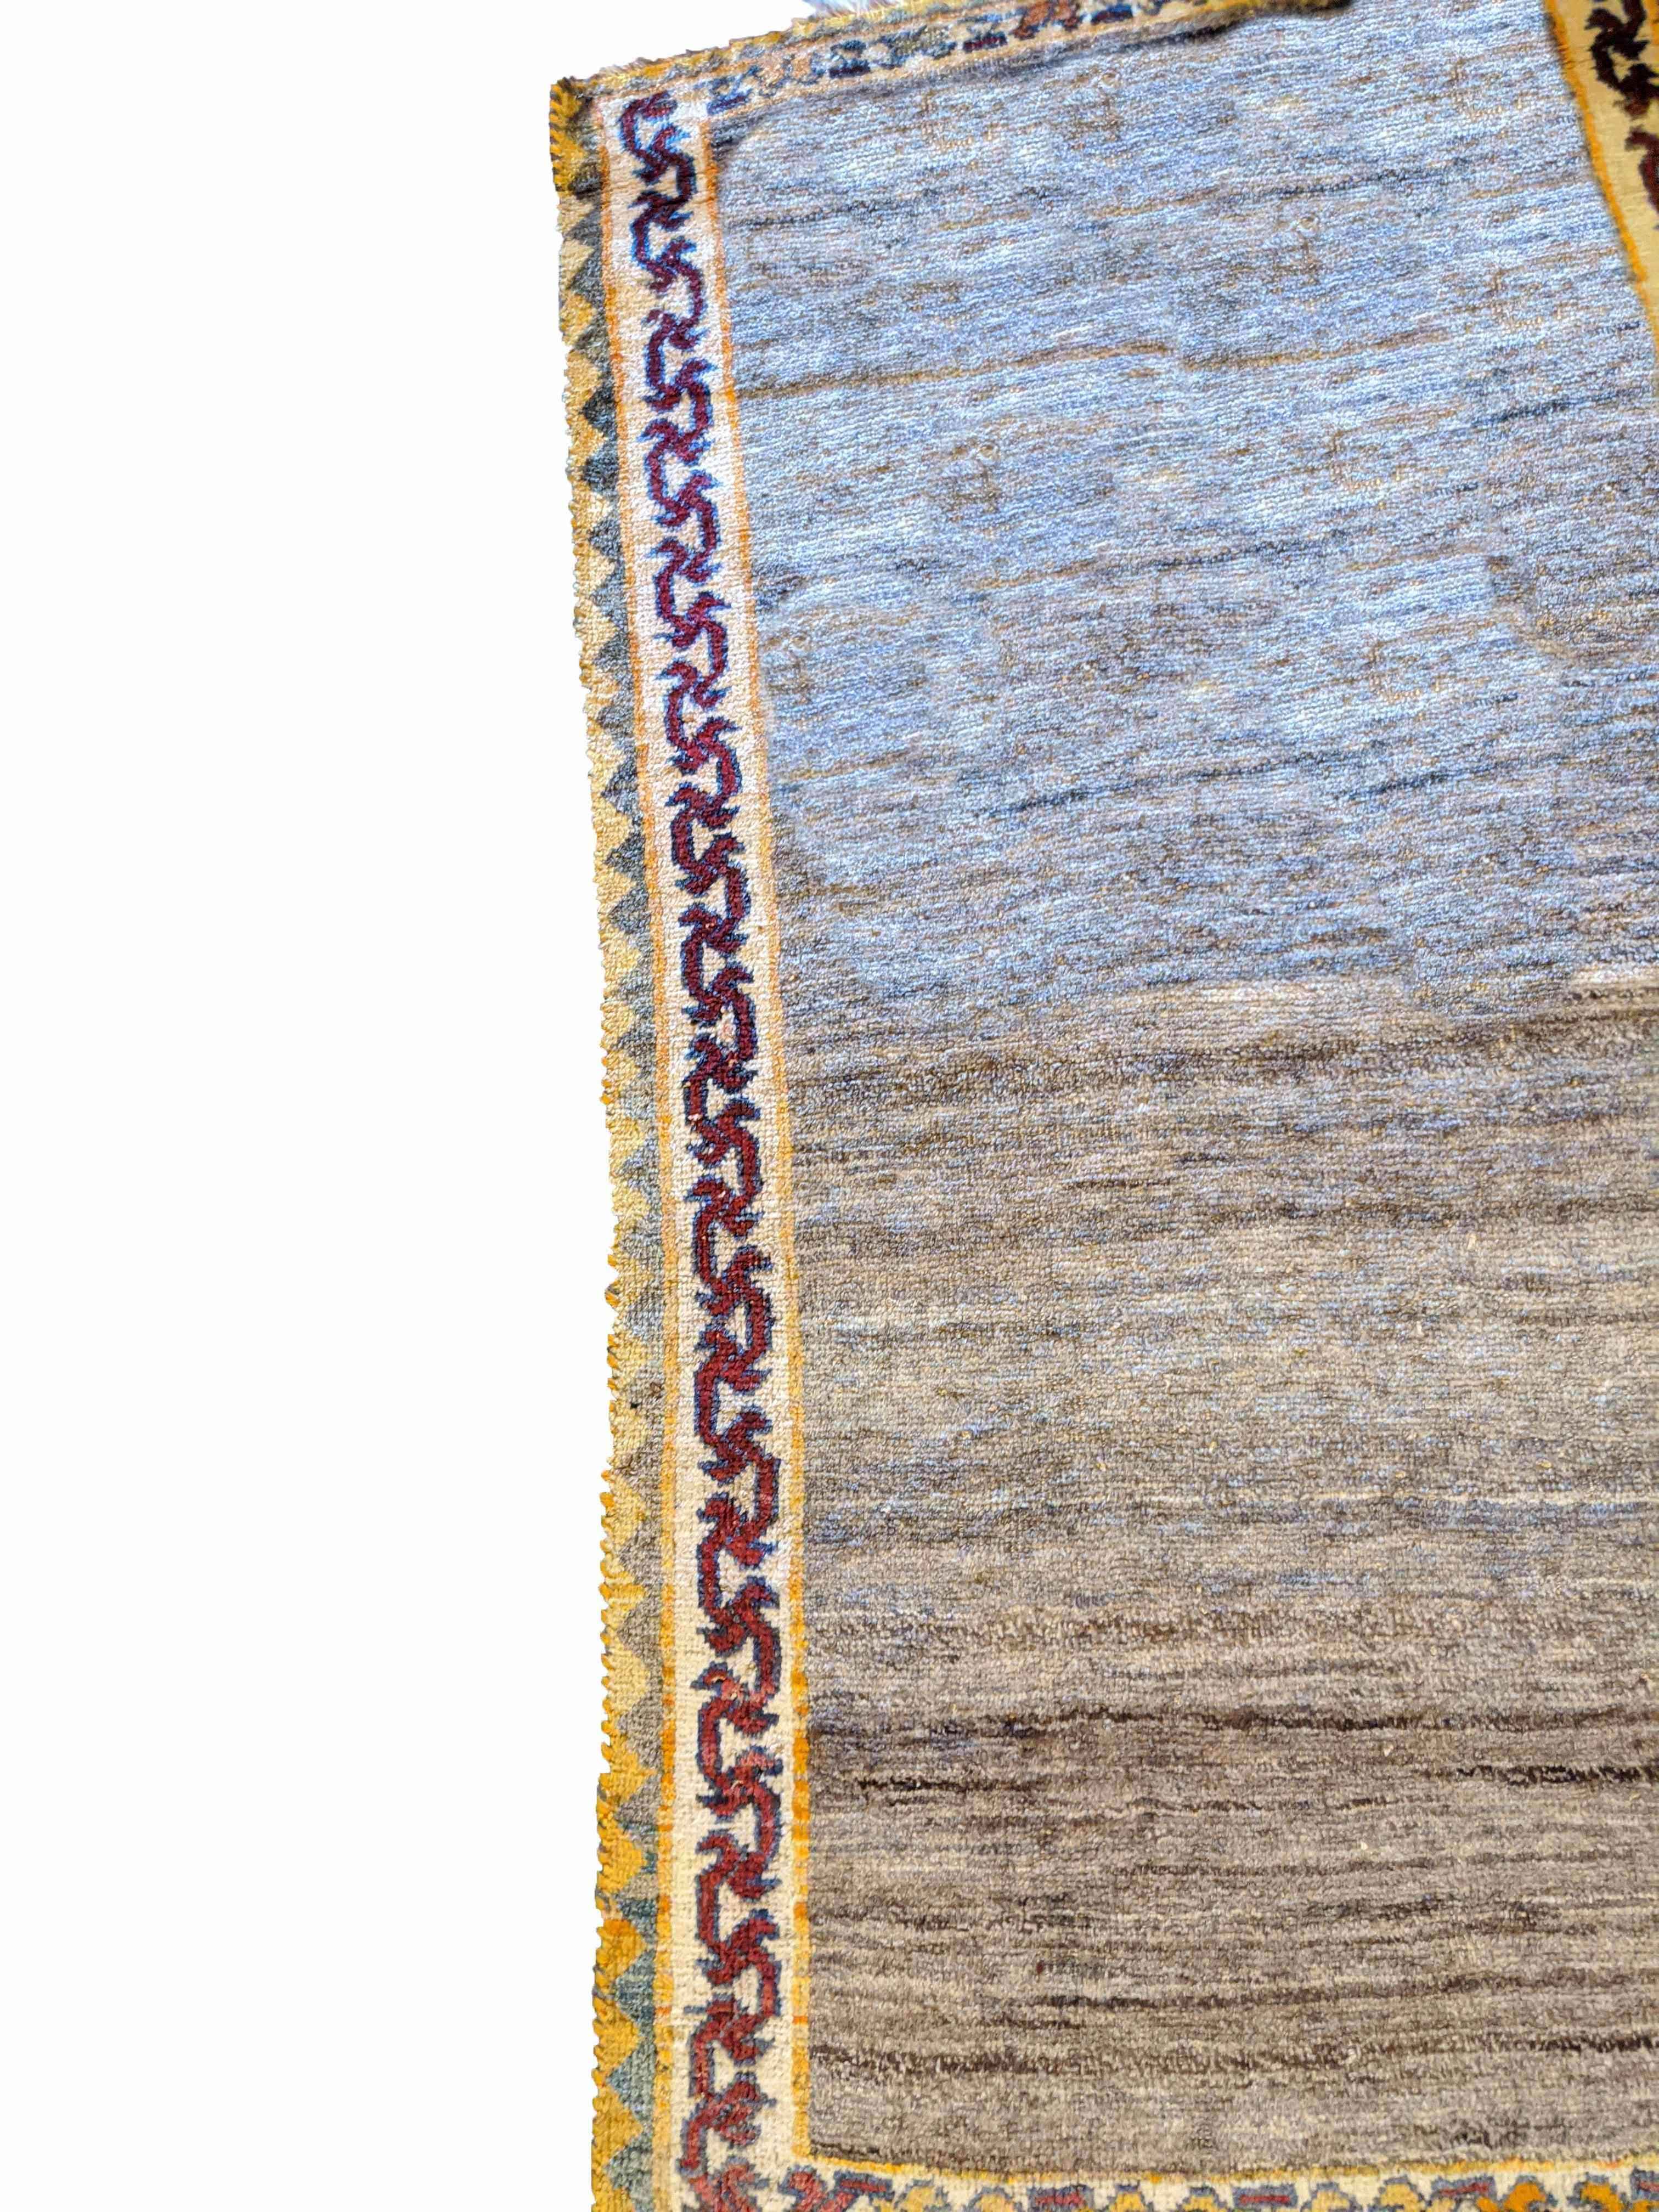 170 x 100 cm Persian Gabbeh Tribal Grey Rug - Rugmaster